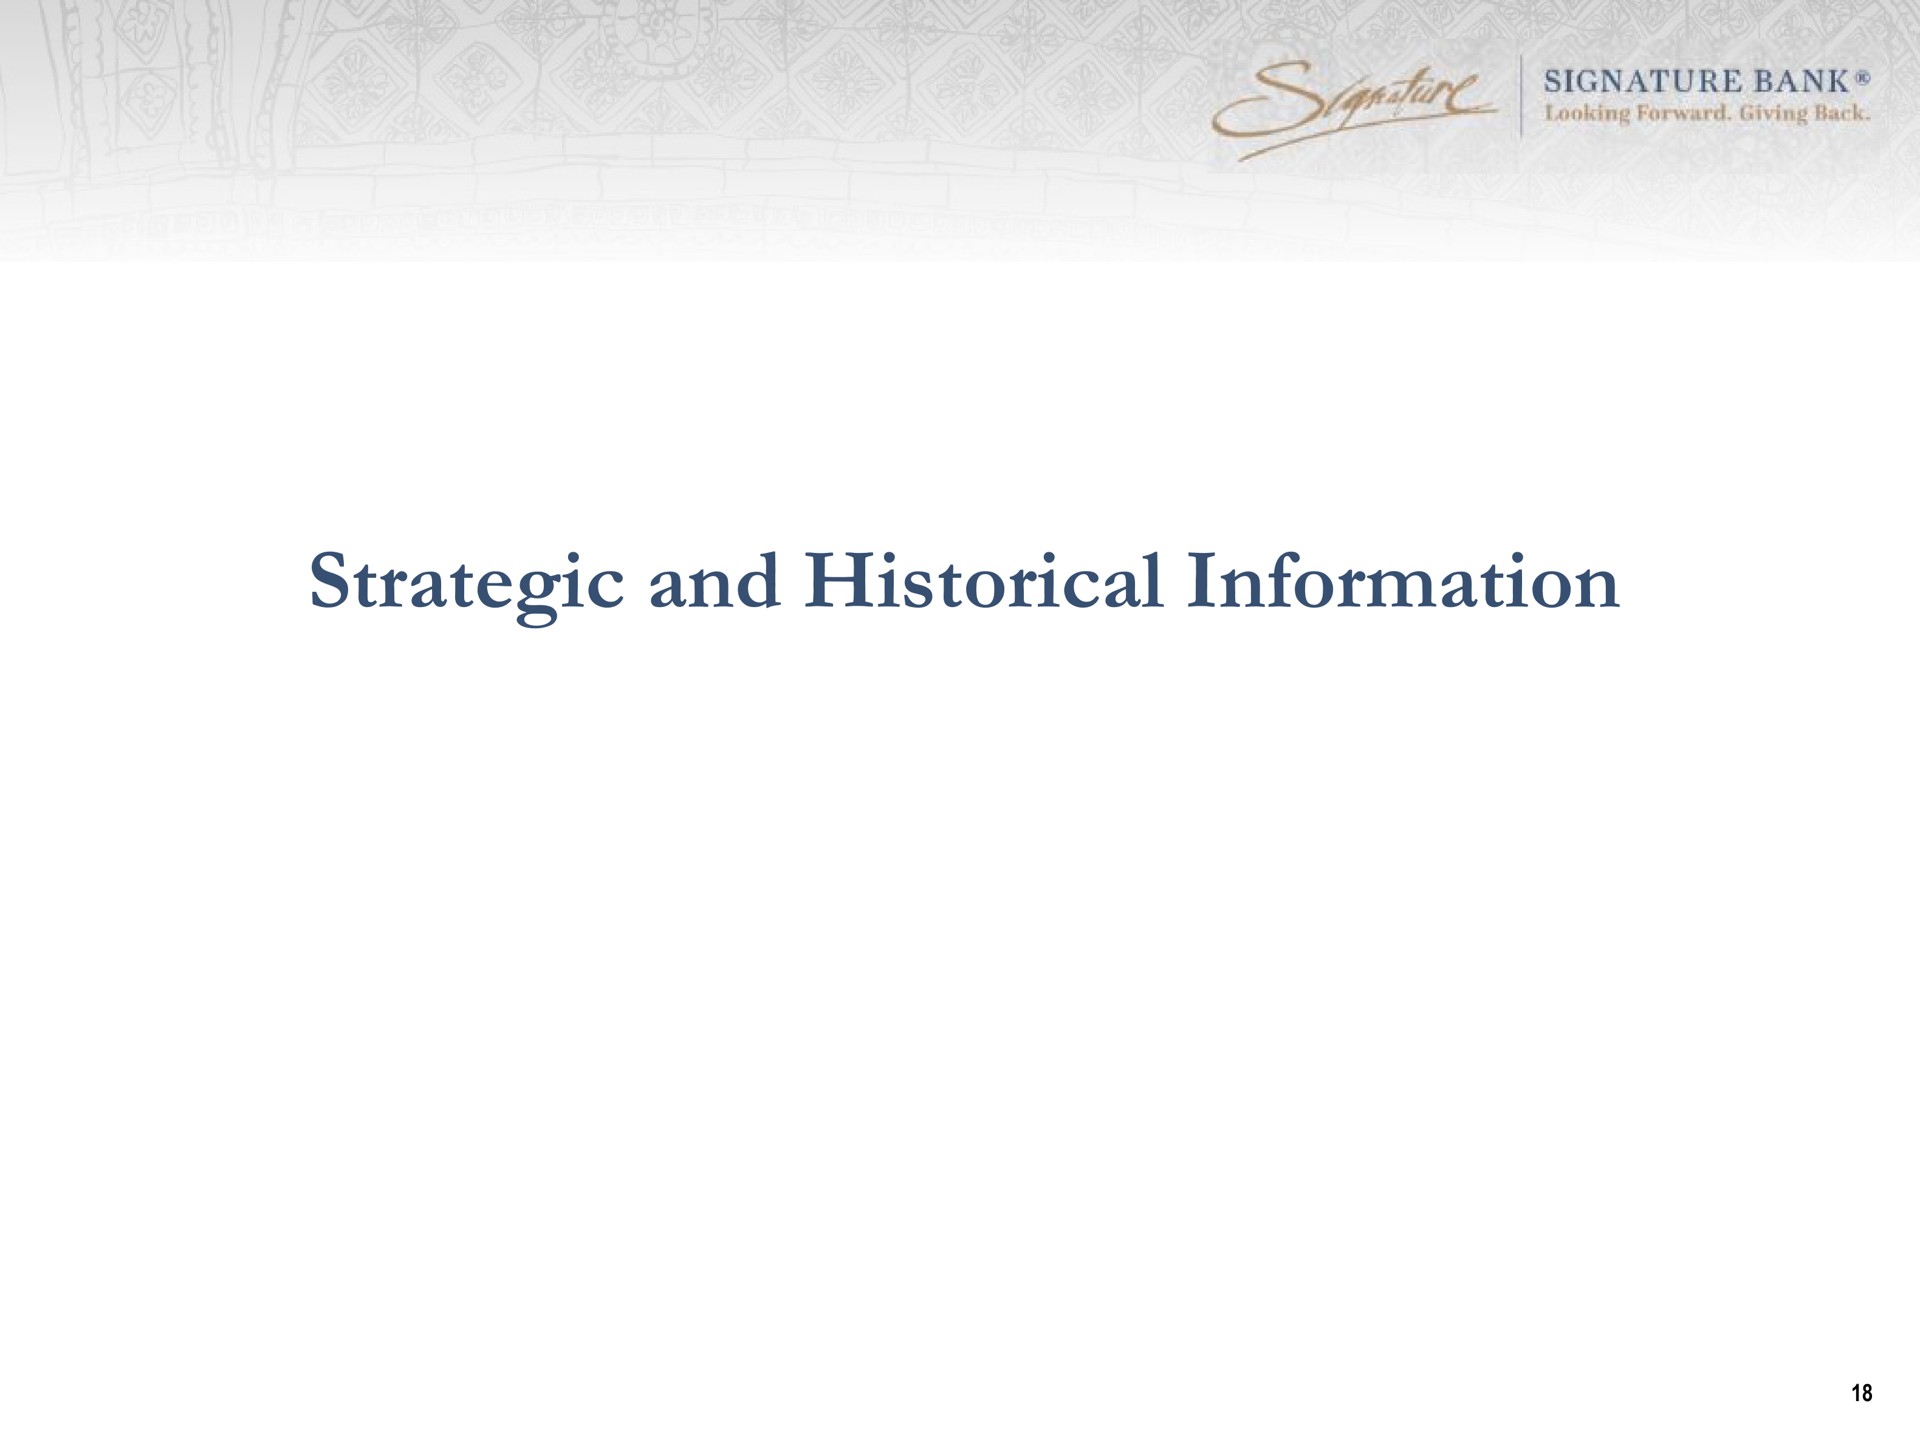 strategic and historical information signature bank | Signature Bank